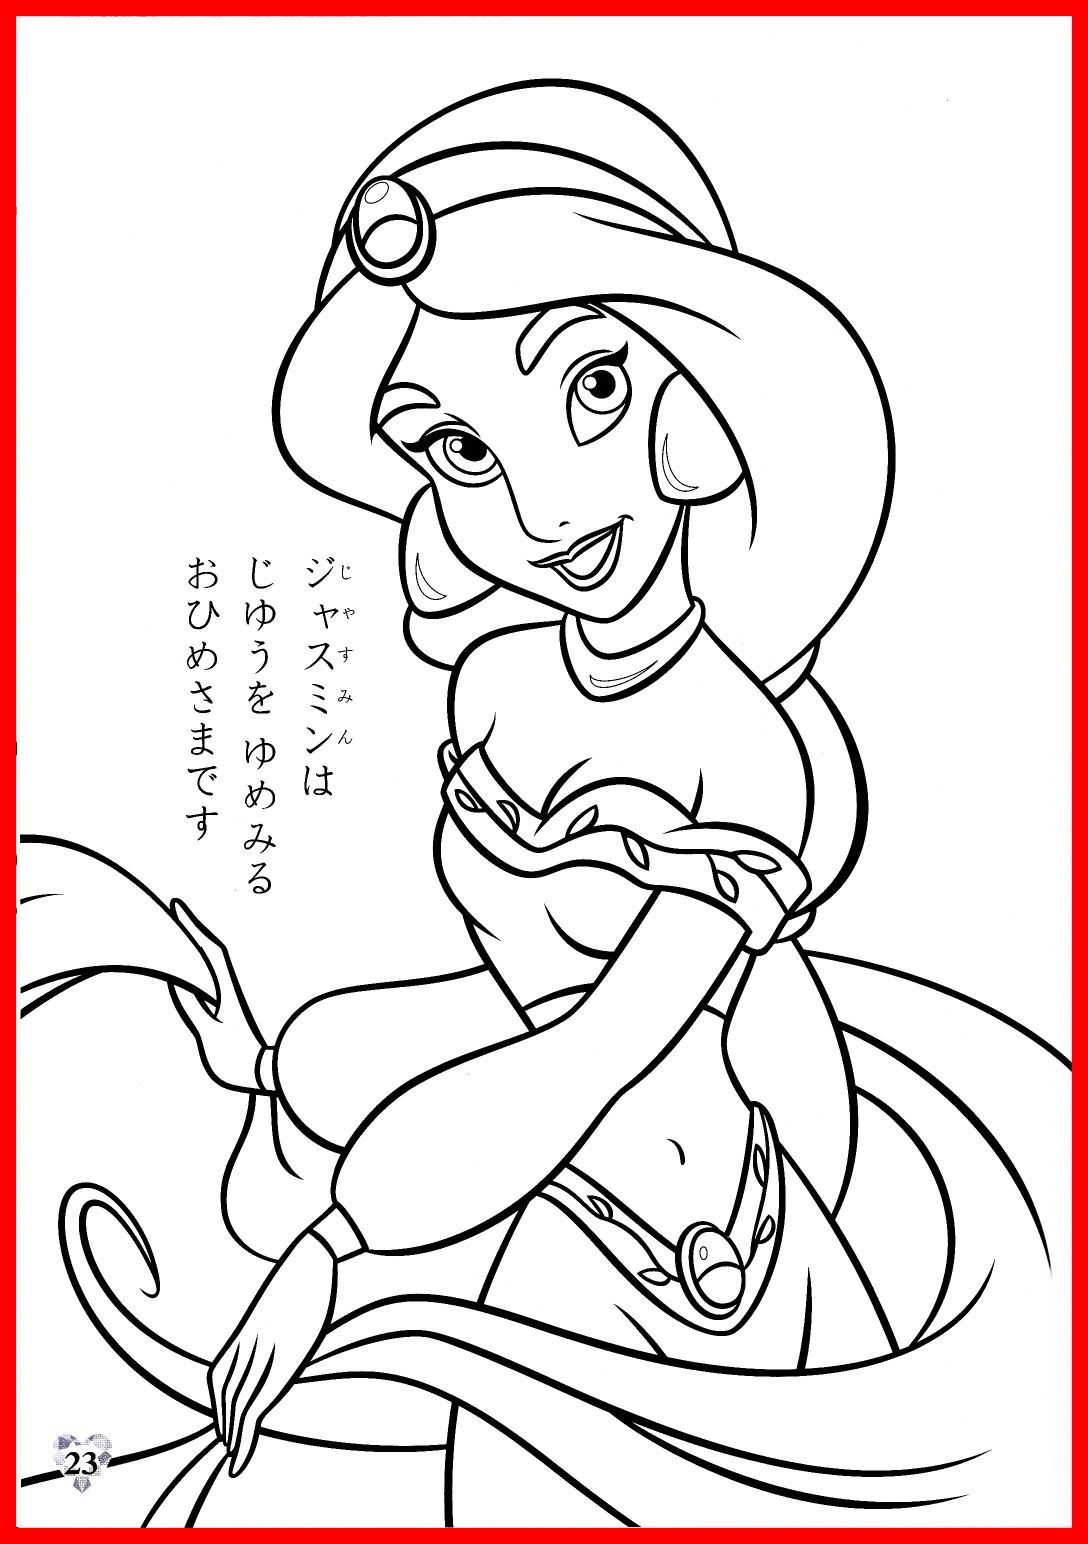 Disney Princess Jasmine Coloring Pages at GetColorings.com   Free ...